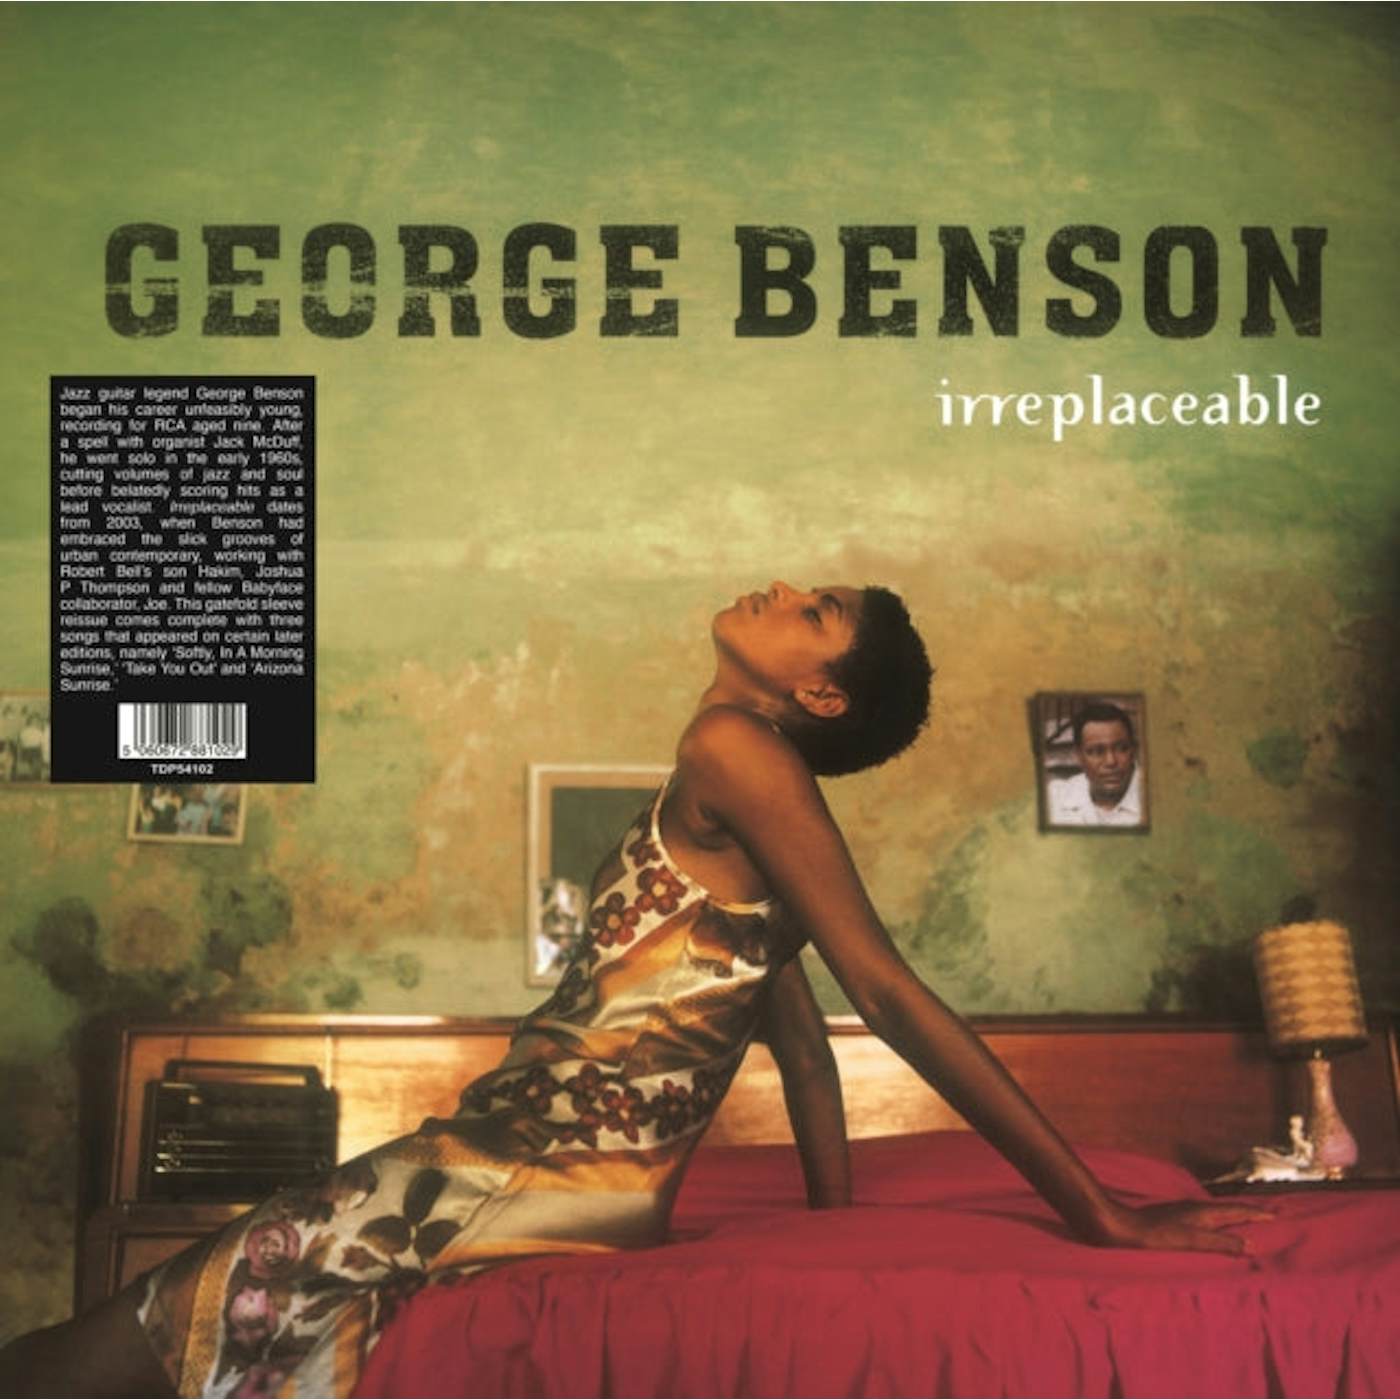 George Benson LP Vinyl Record - Irreplaceable